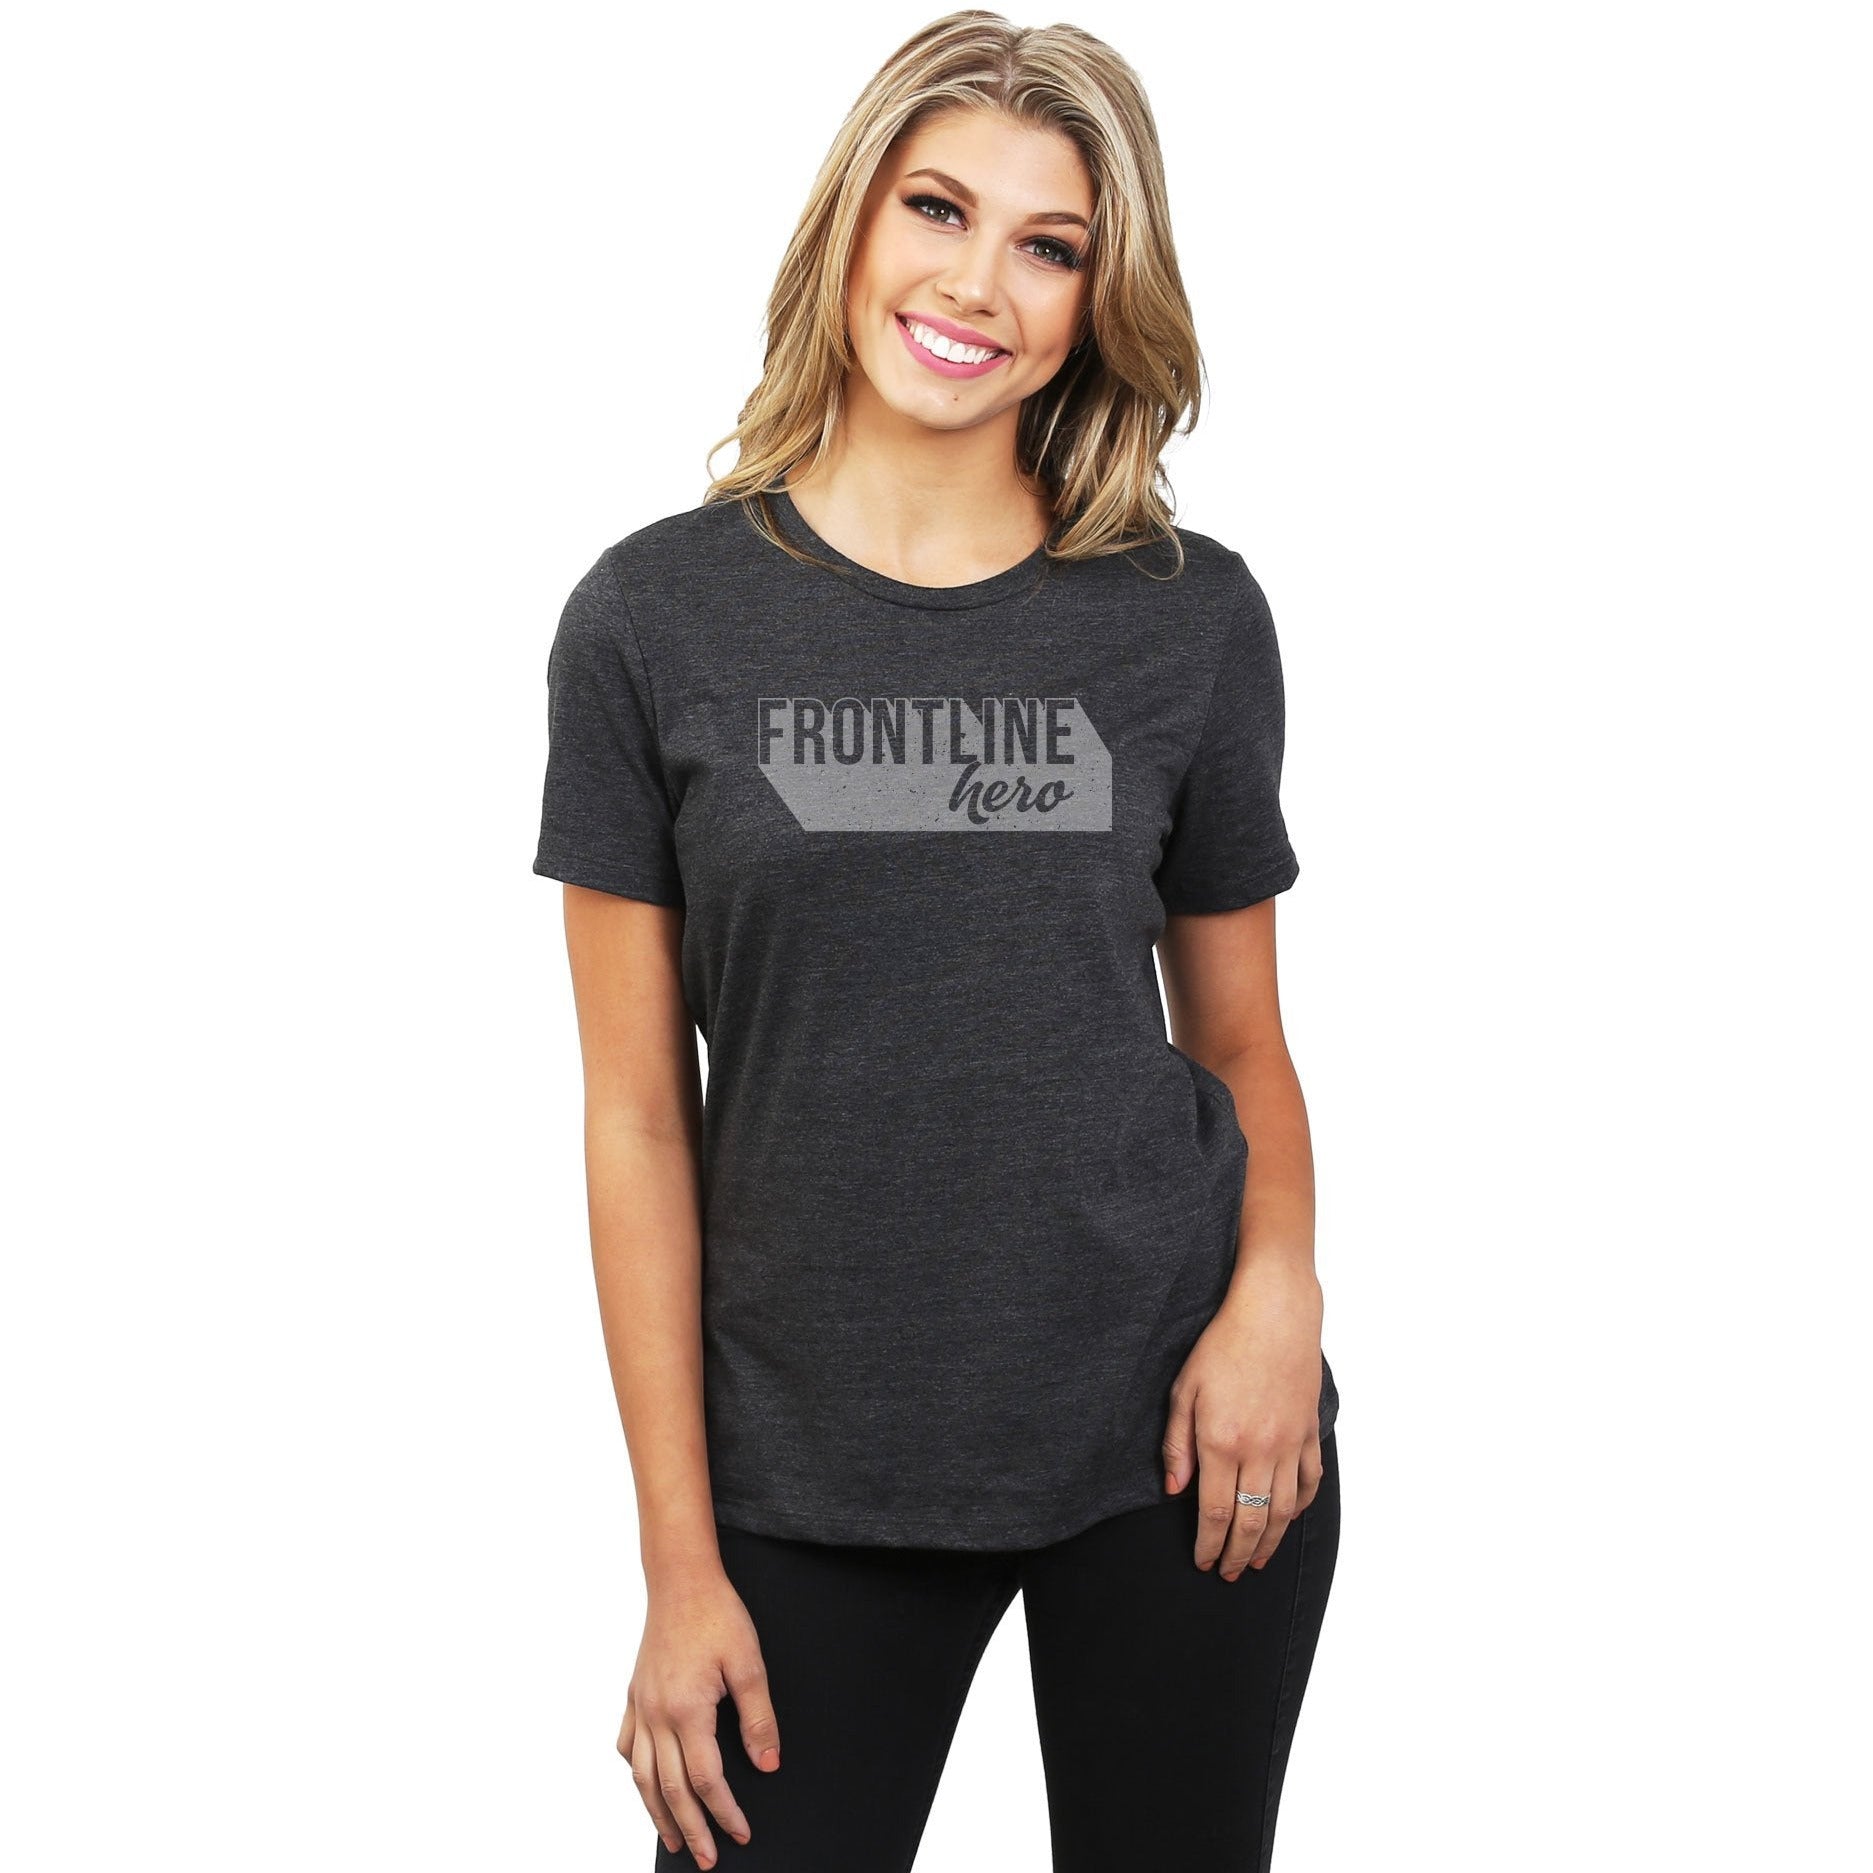 Frontline Hero Women's Relaxed Crewneck T-Shirt Top Tee Charcoal Model
